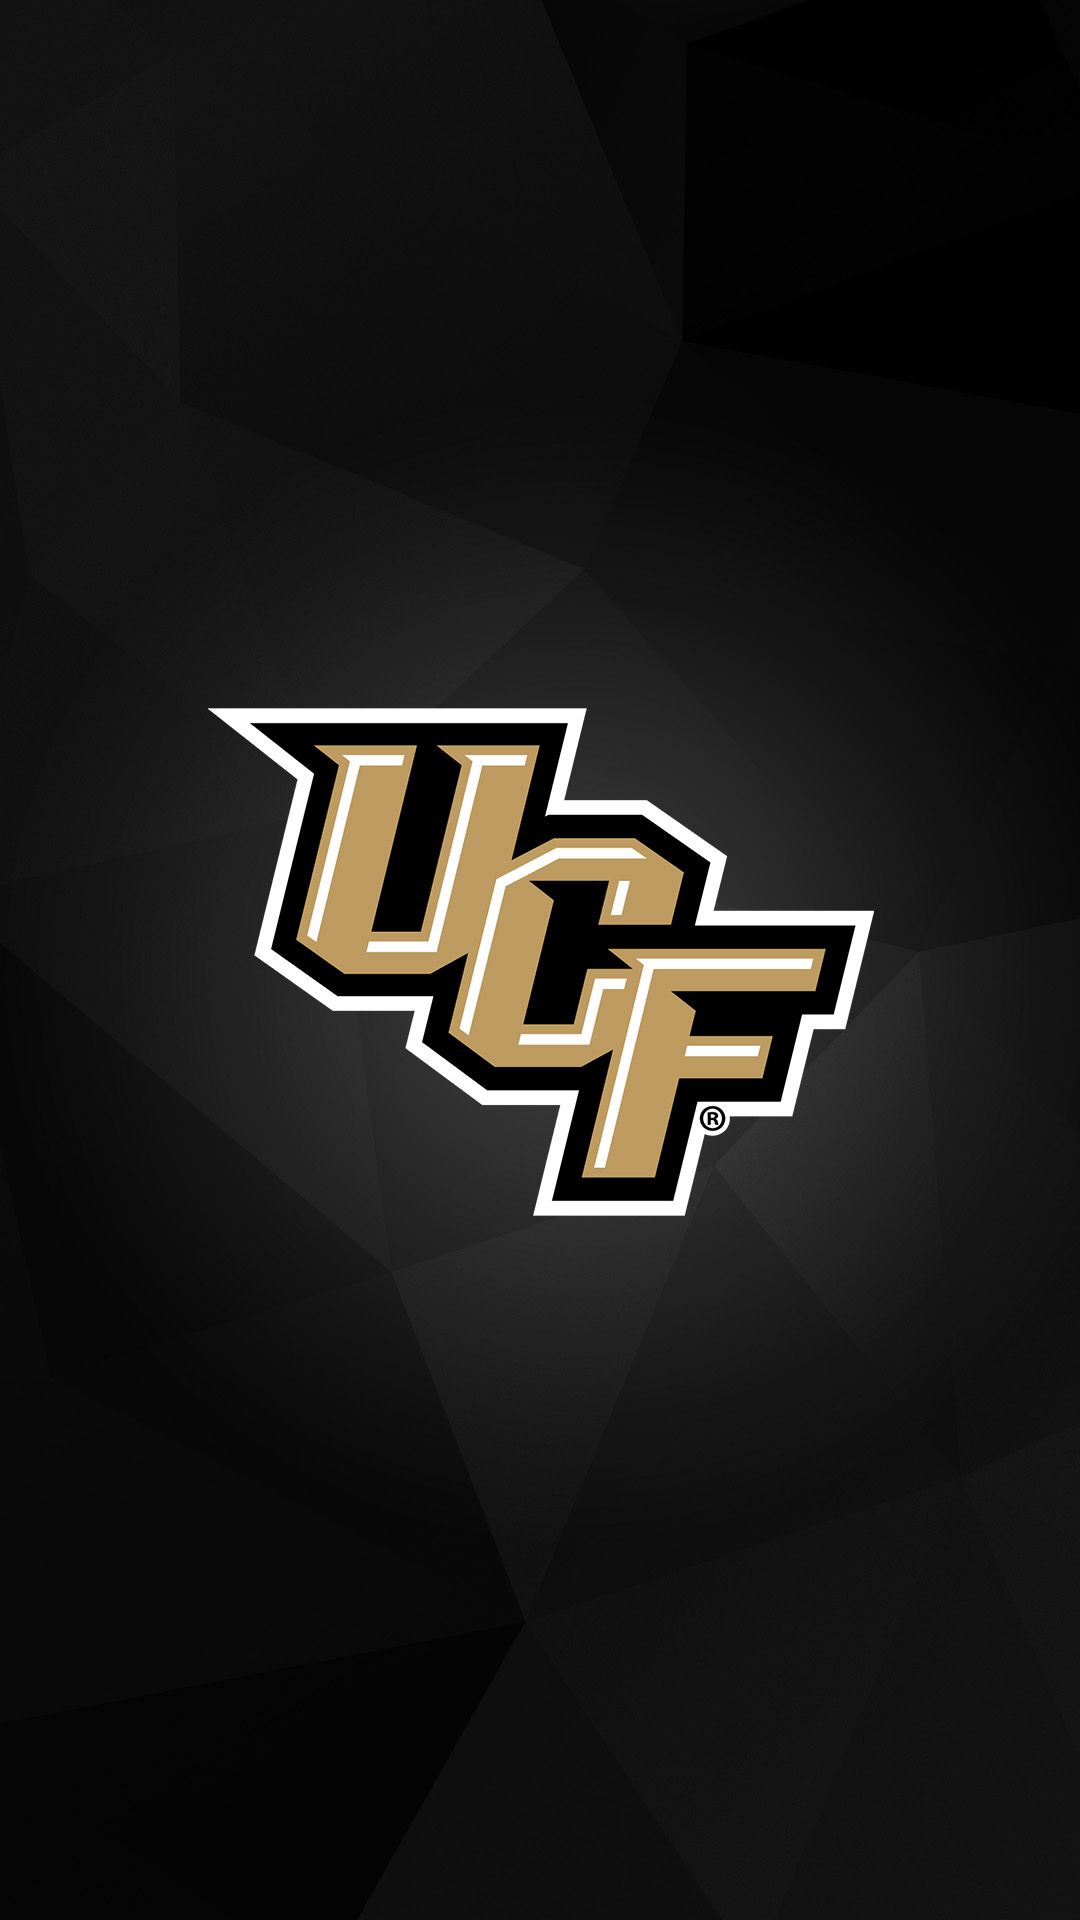 Destop Mobile Wallpaper.com. UCF Knights. Ucf Football, Ucf Knights, Knight Logo